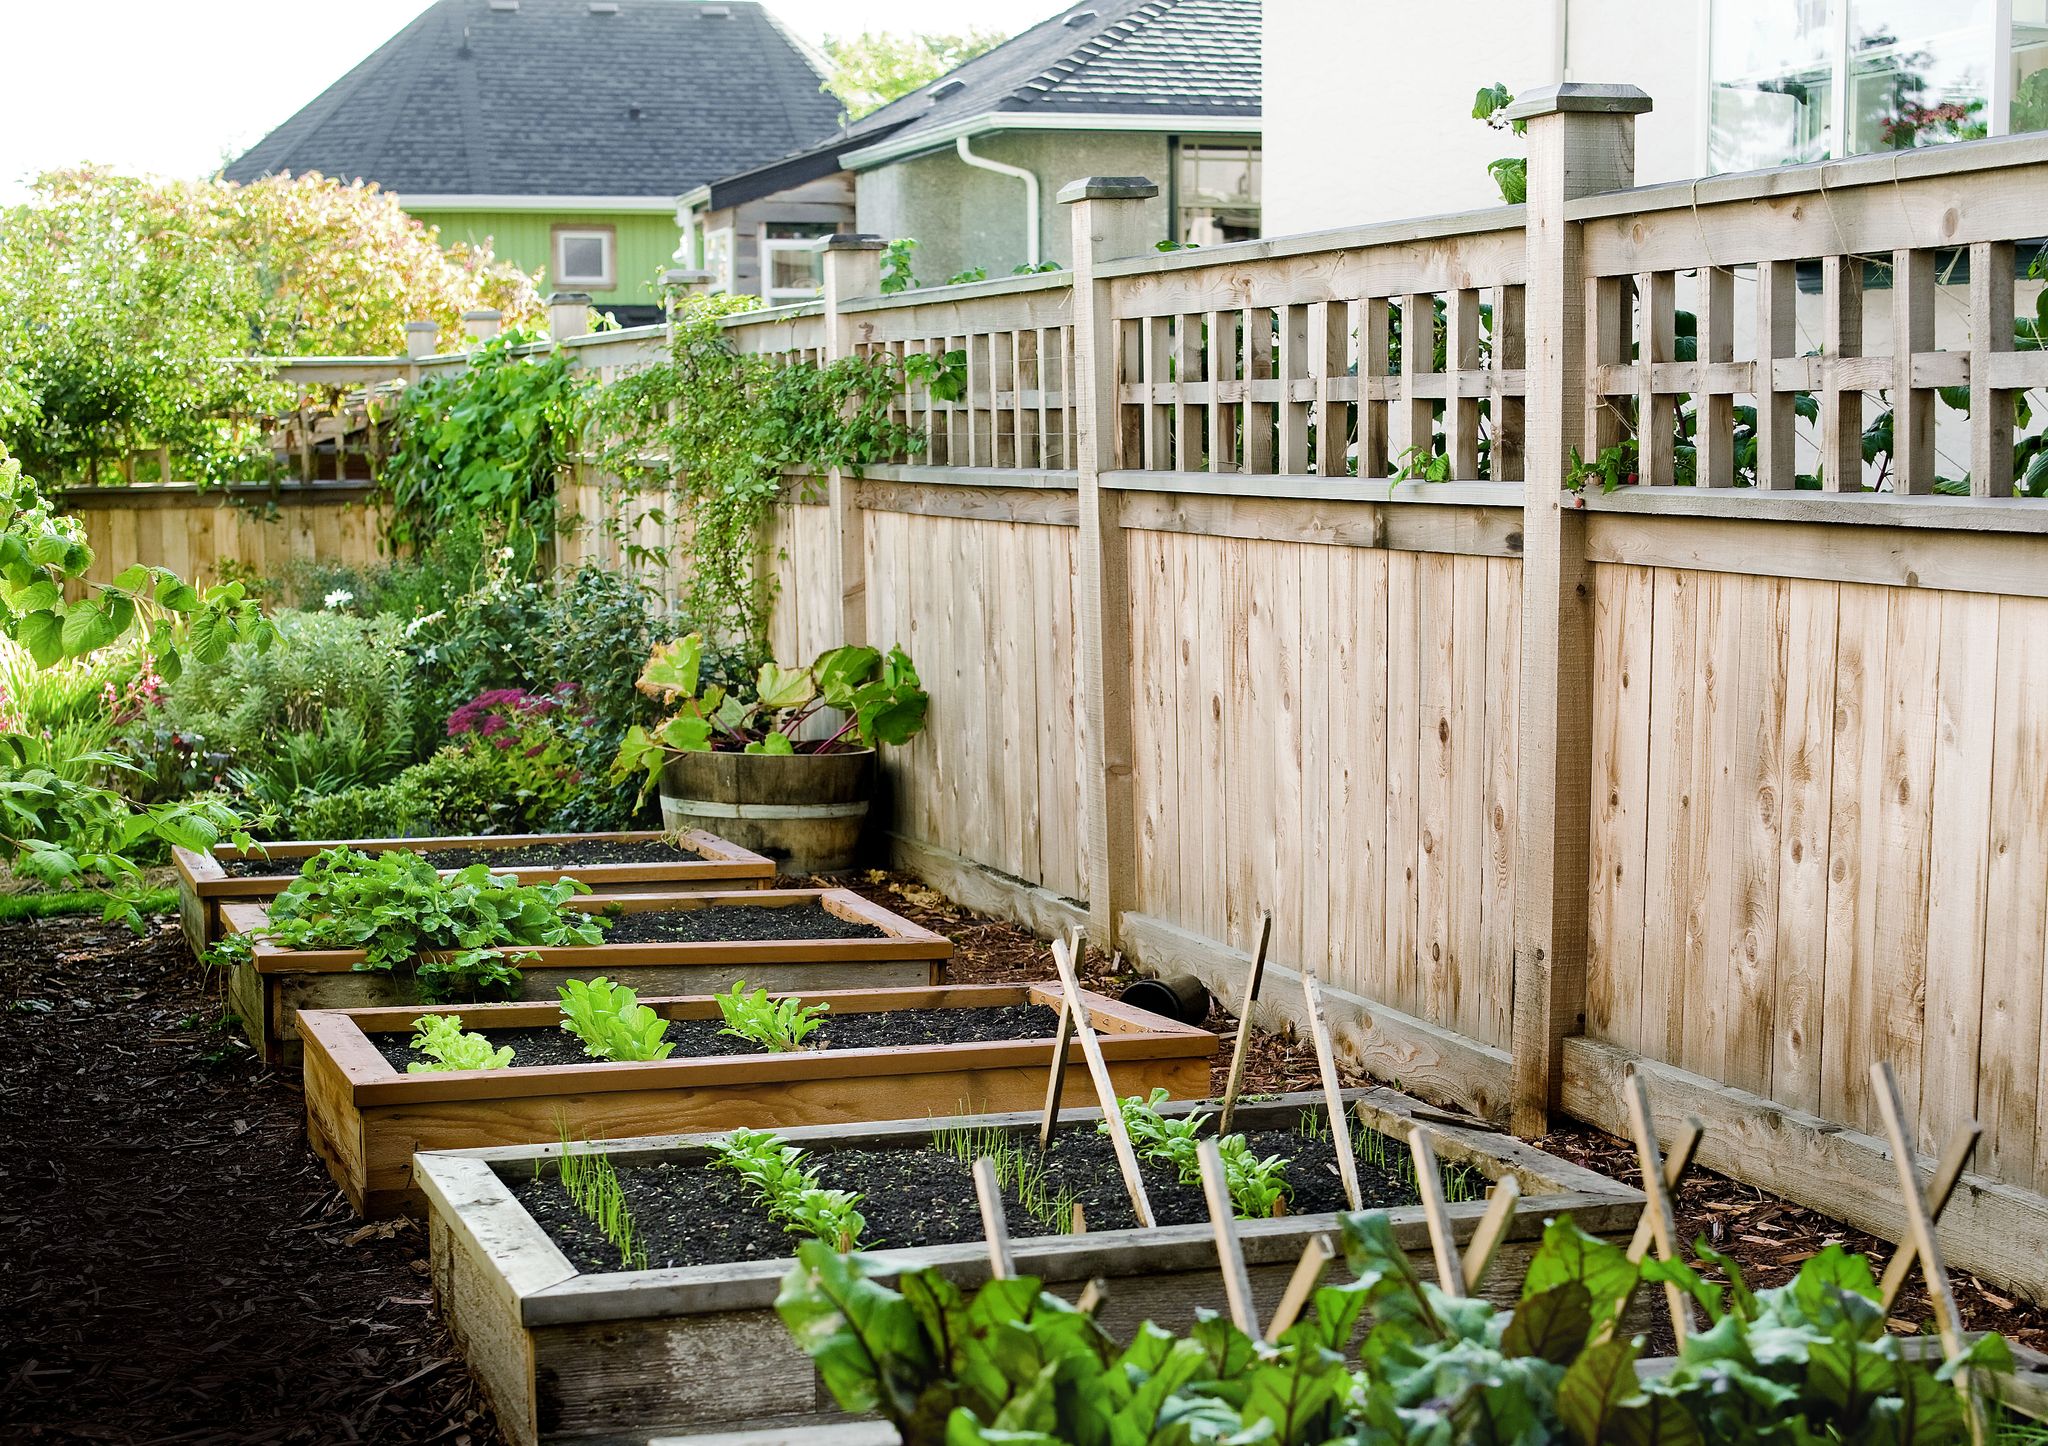 How To Start A Garden | Build This Raised Garden Bed